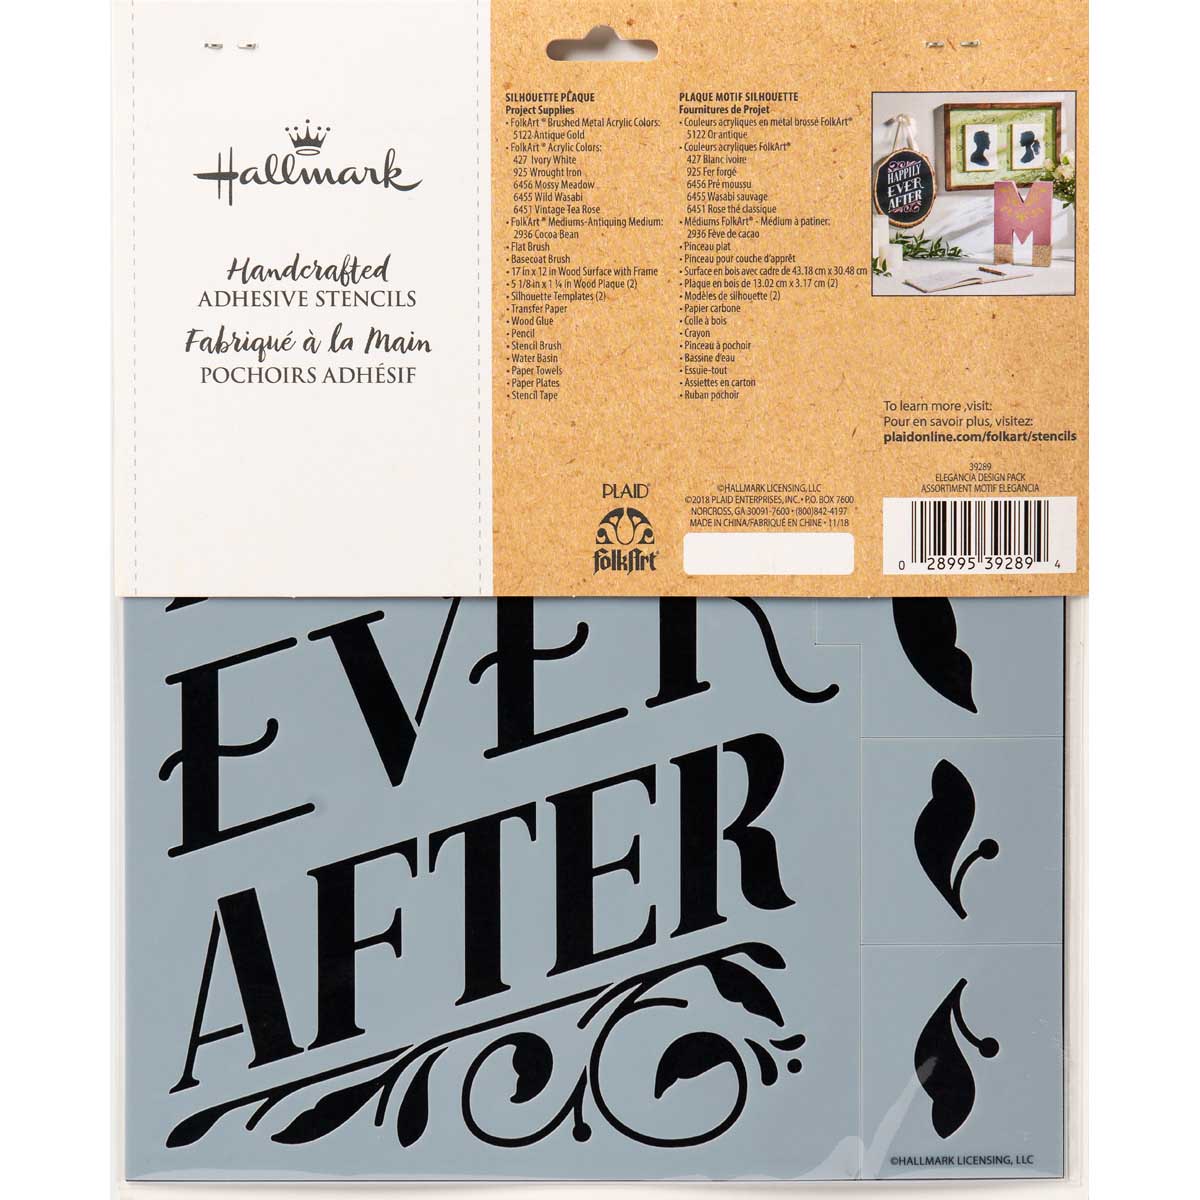 Hallmark Handcrafted Adhesive Stencils - Elegancia Design Pack, 8-1/2